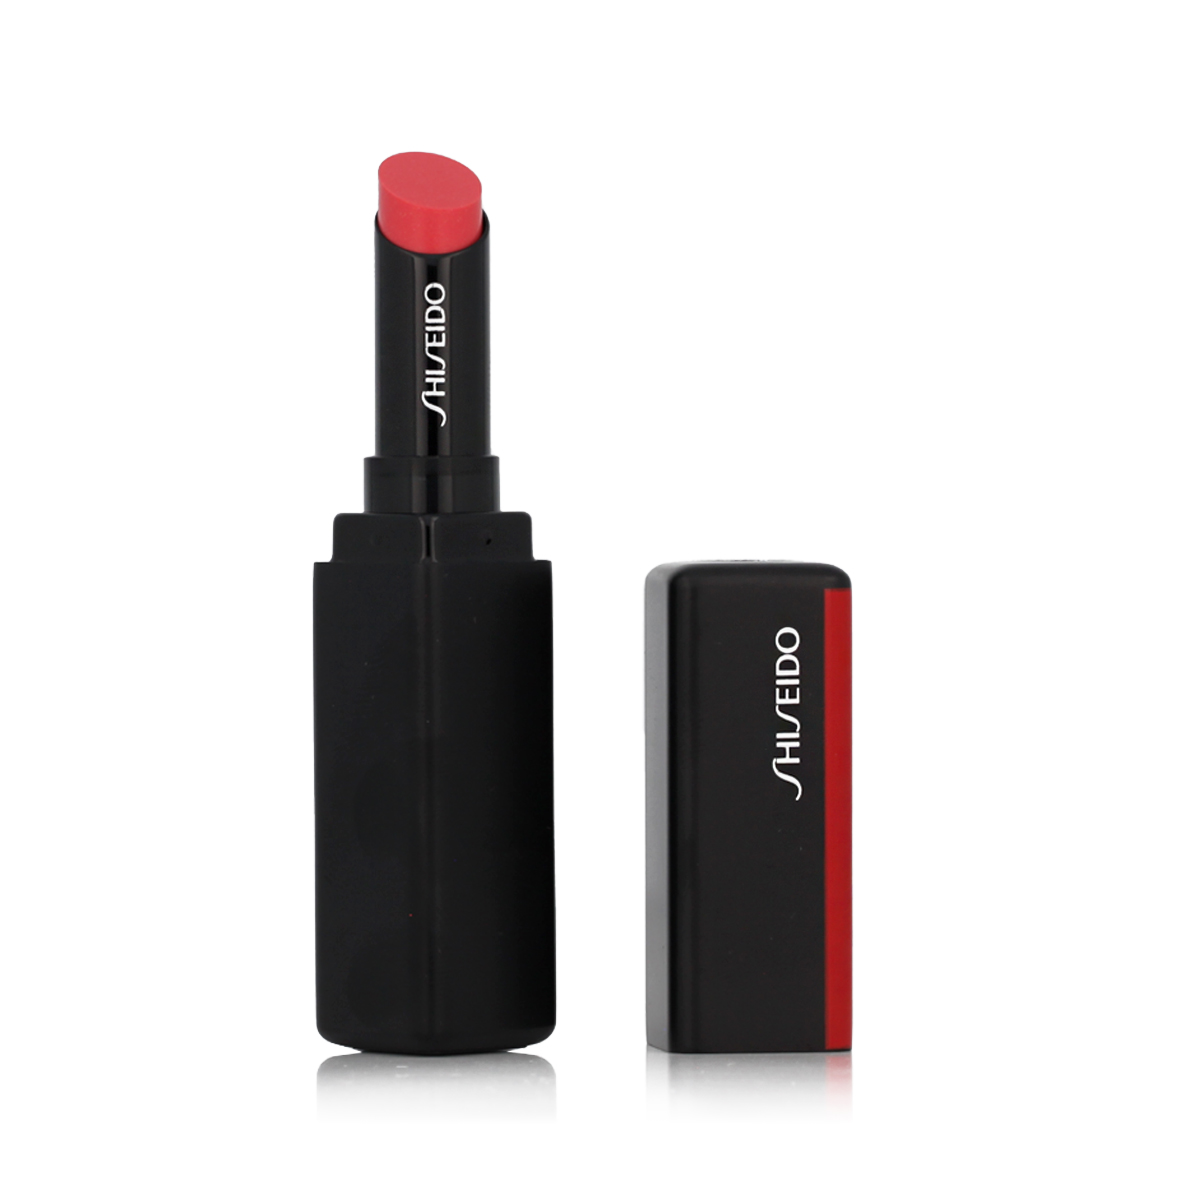 Shiseido ColorGel Lip Balm 2g lūpų blizgesys